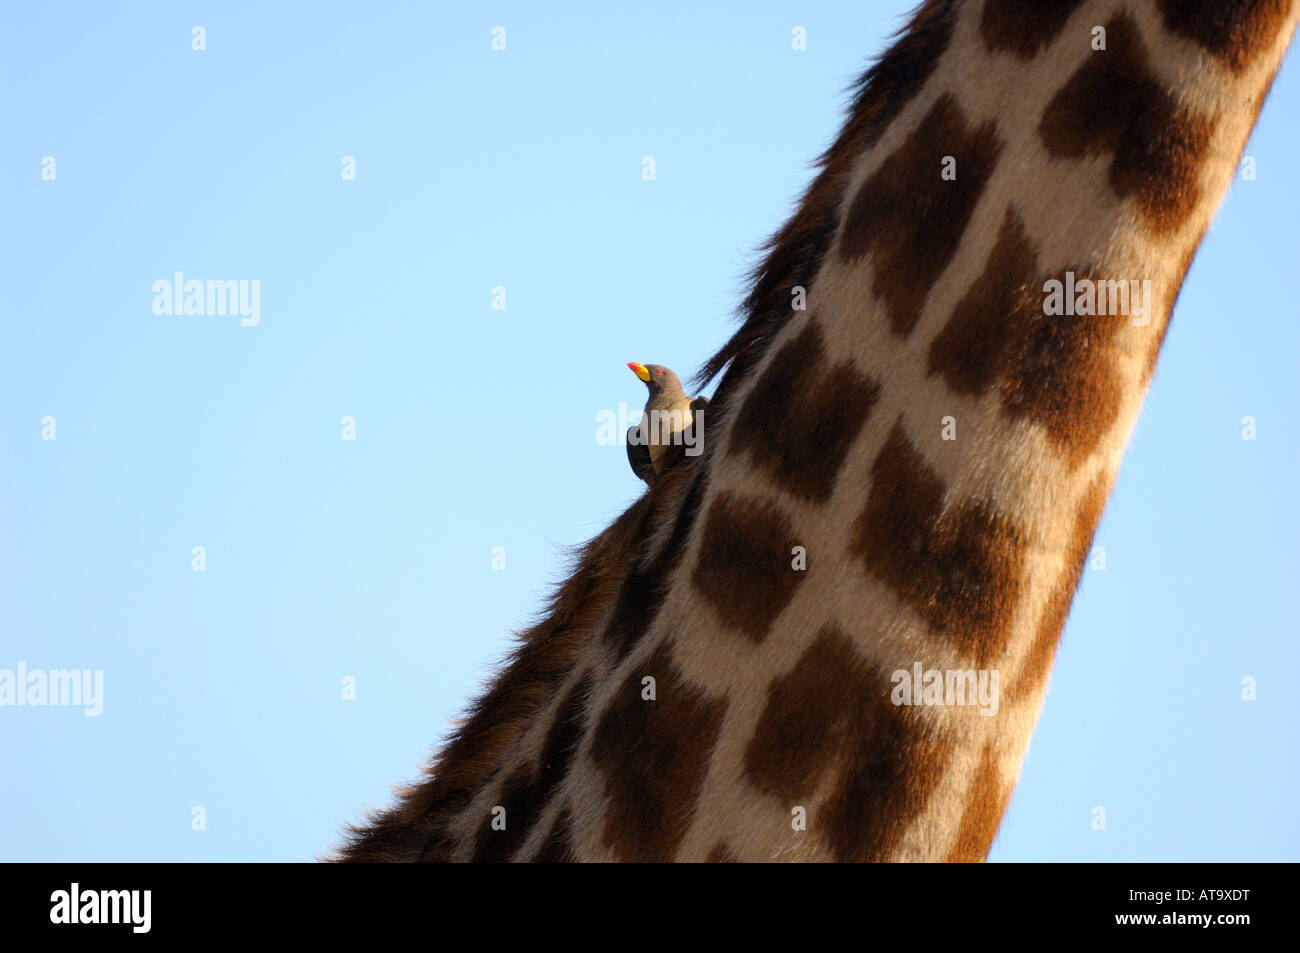 Giraffe neck with a bird close-up, Maasai Mara, Kenya Stock Photo